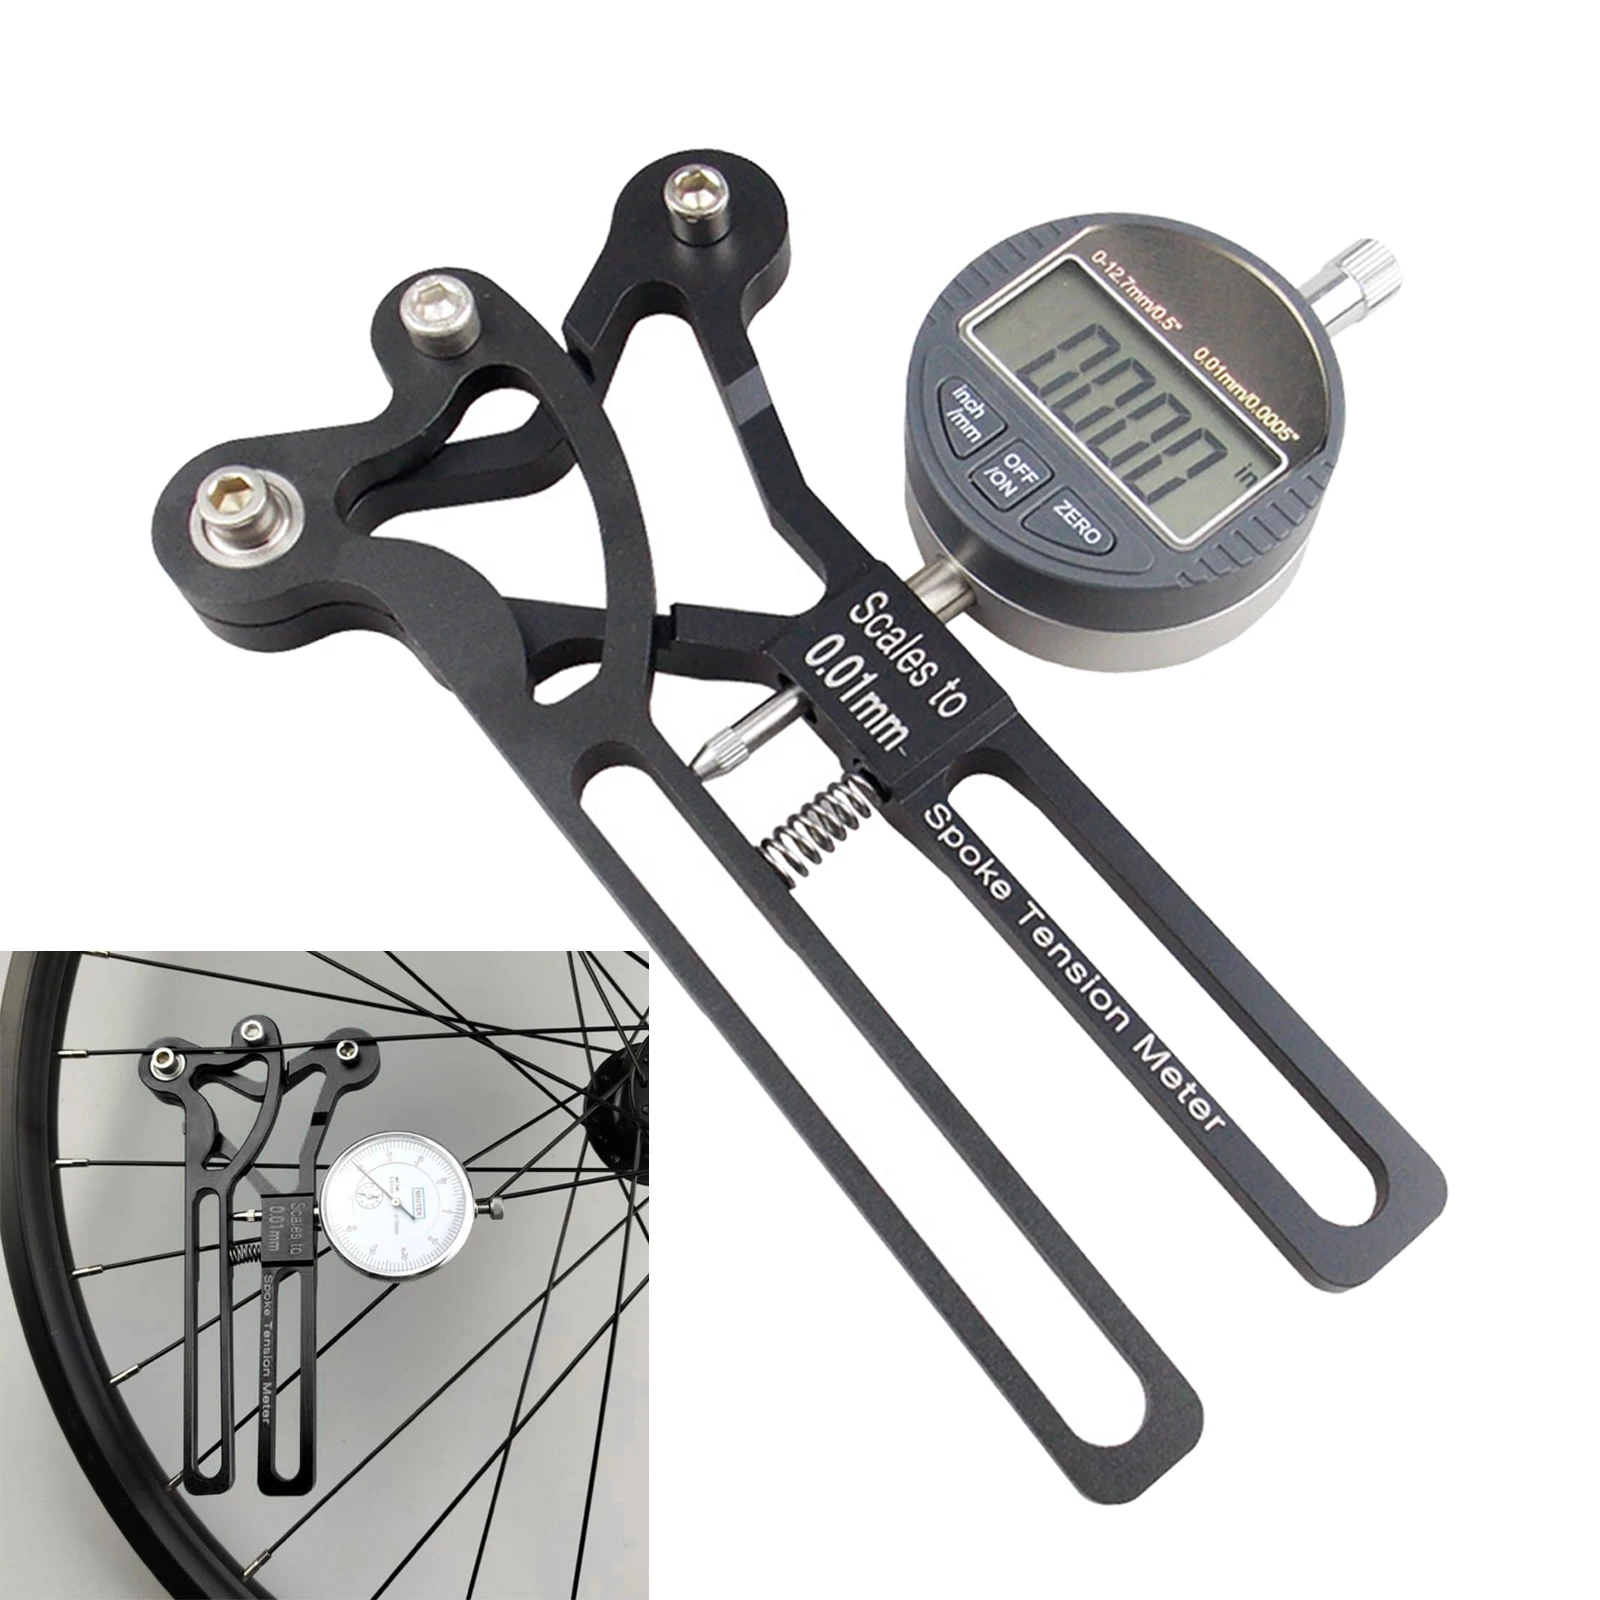 Bicycle Tension Meter Bike Cycling Spokes Tension Meter High Precision Accurate Indicator Bike Wheel Builders Tool Accessories